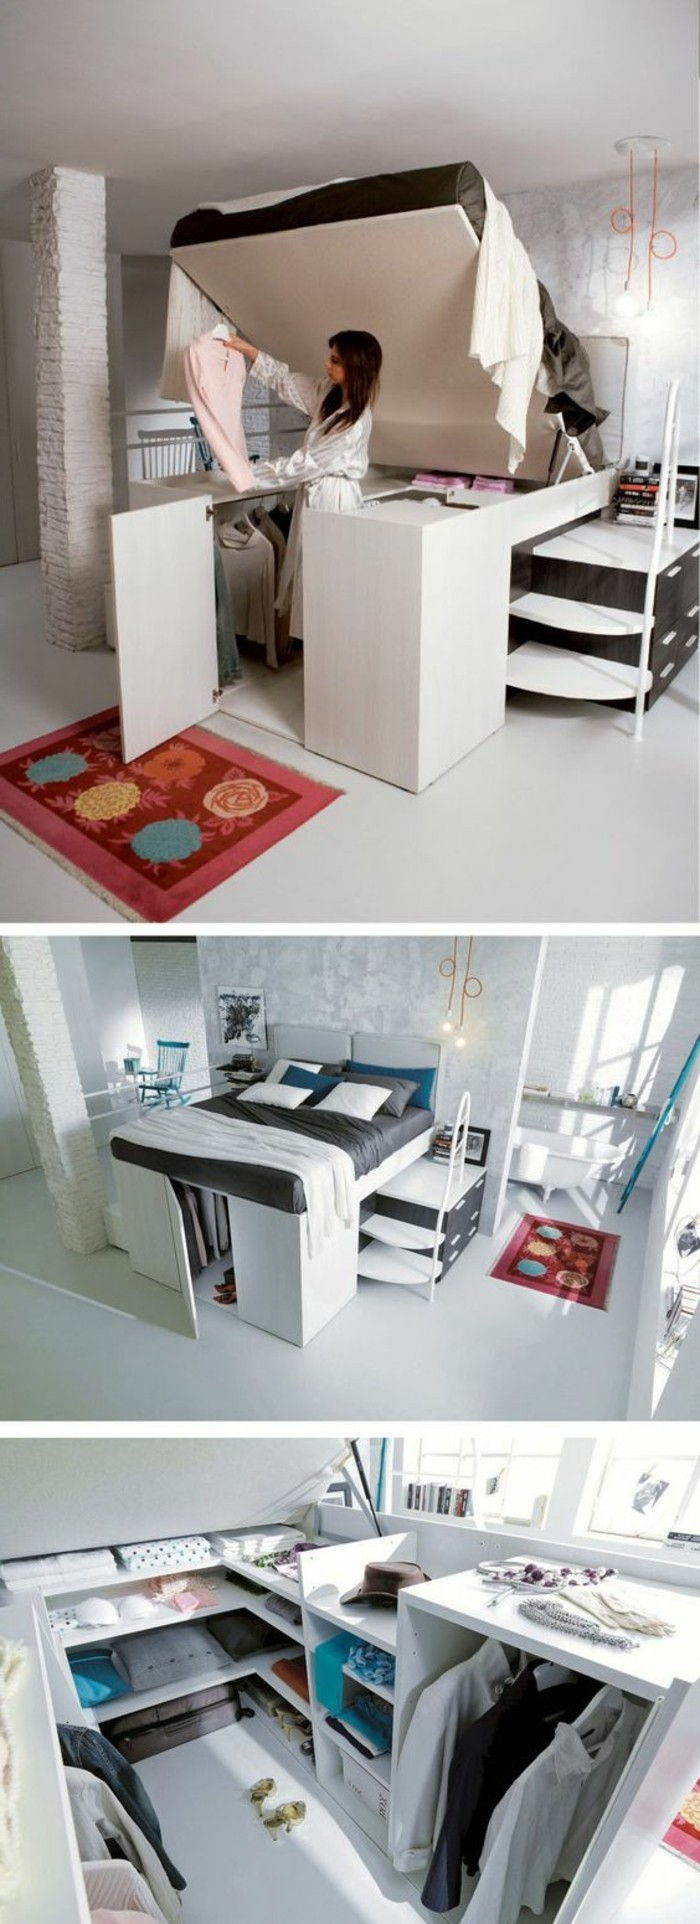 10-kvadrat-roms satt opp seng-med-innebygd garderobe-trapp-mønster teppe-hvitt-gulv